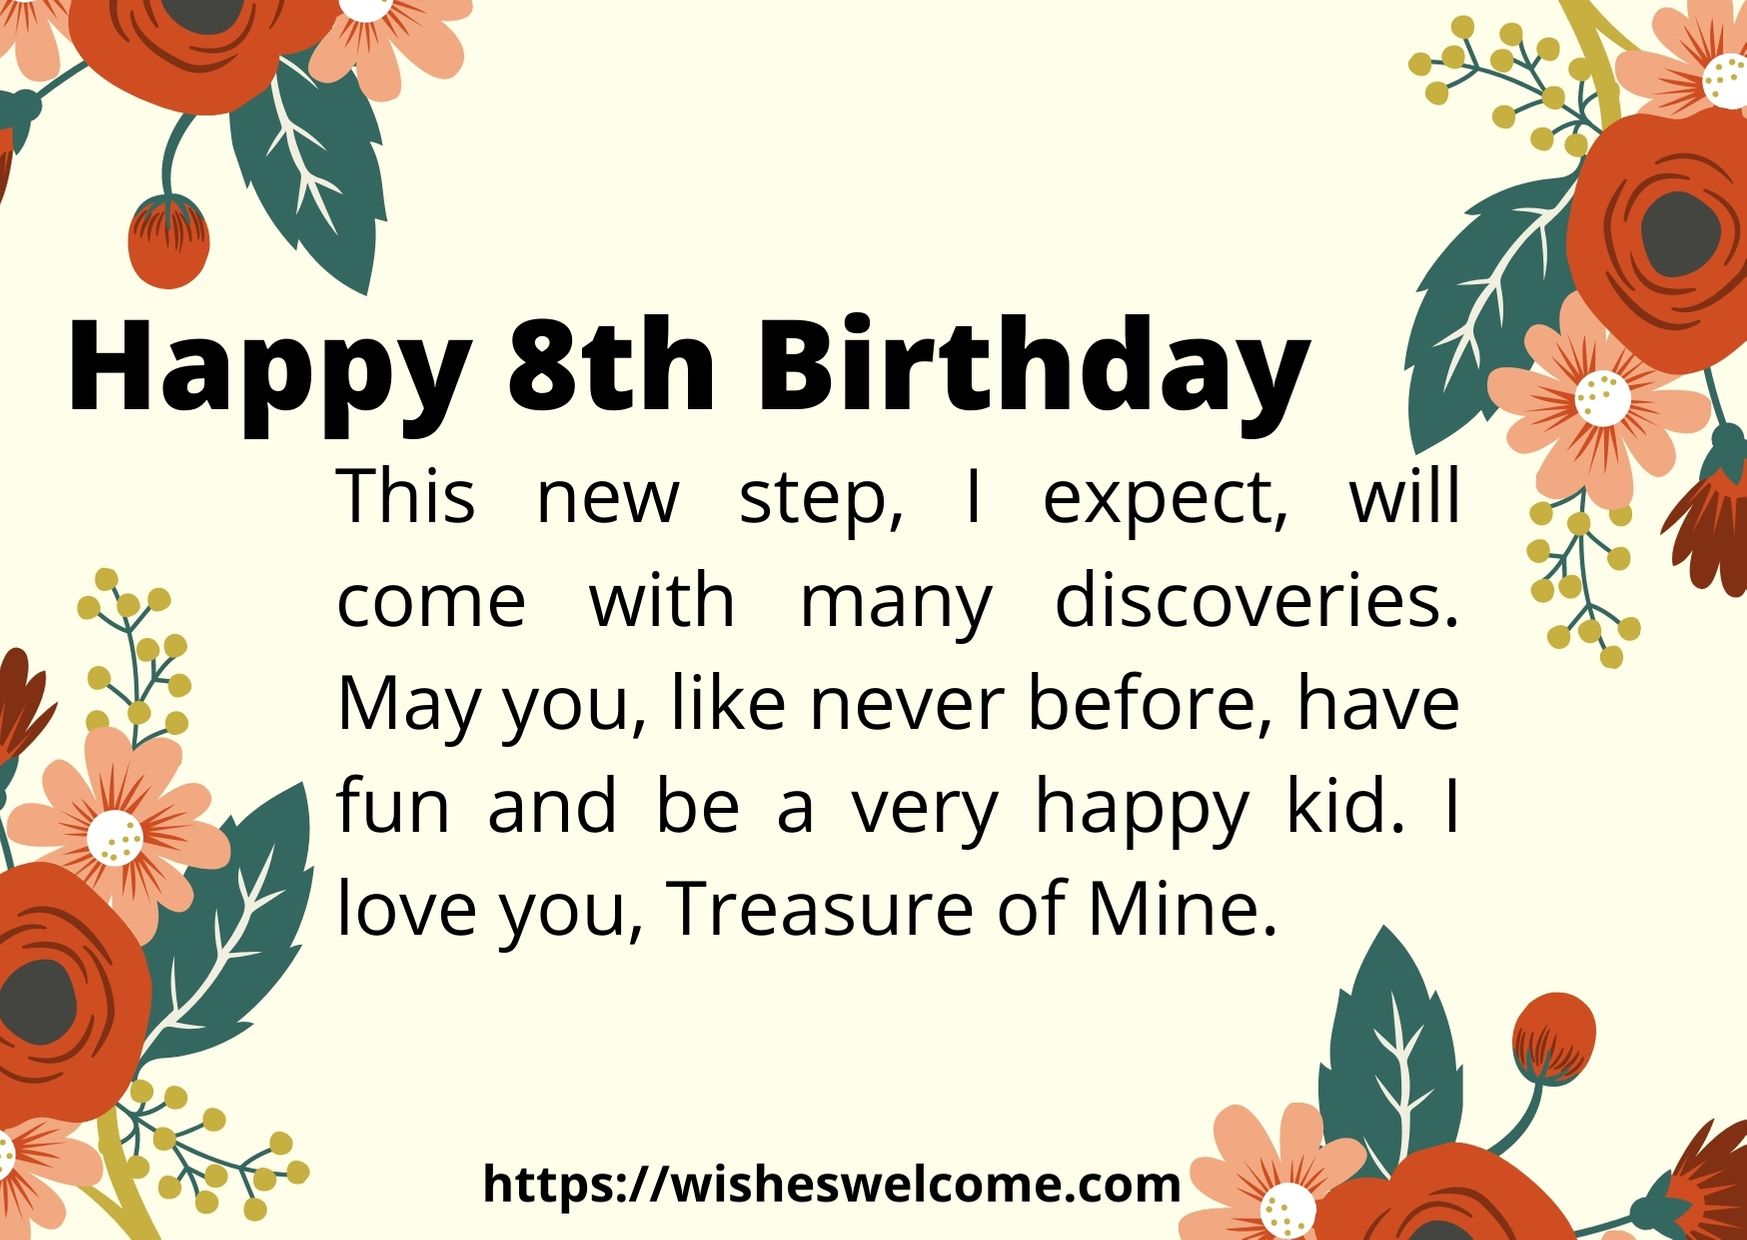 Happy 8th Birthday wishes